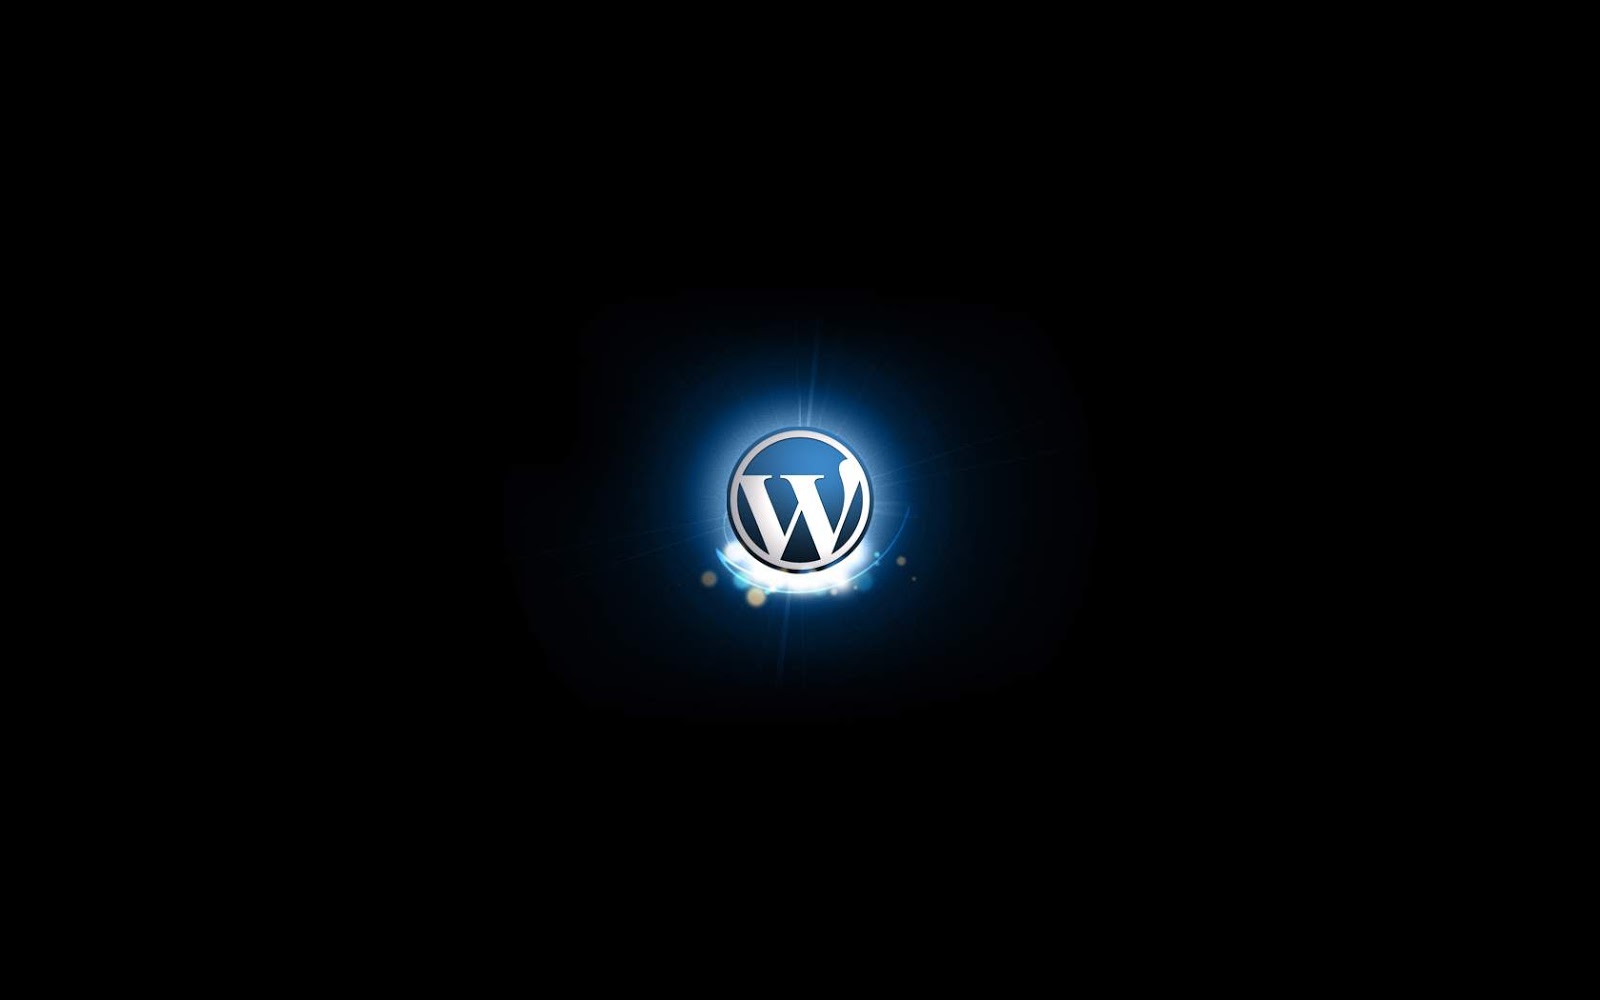 Wallpaper HD High Quality Black Blue Wordpress Logo Desktop